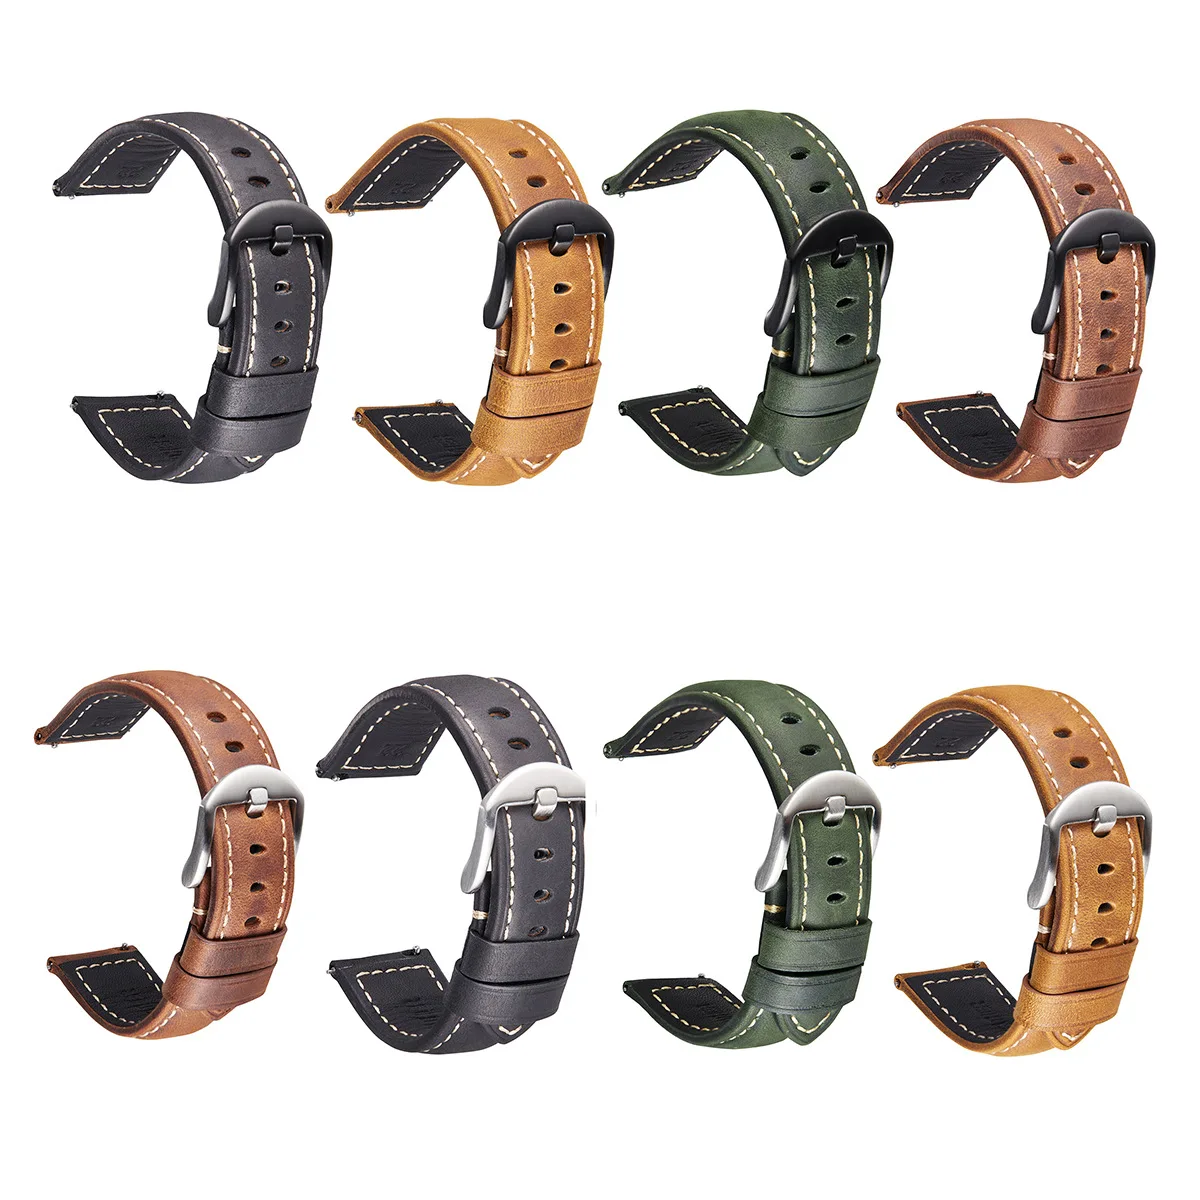 

Genuine Leather Watch Accessories Watch Strap 20mm 22mm 24mm 26mm Vintage Cow Leather Watch Band For Panerai Fossil Watchband